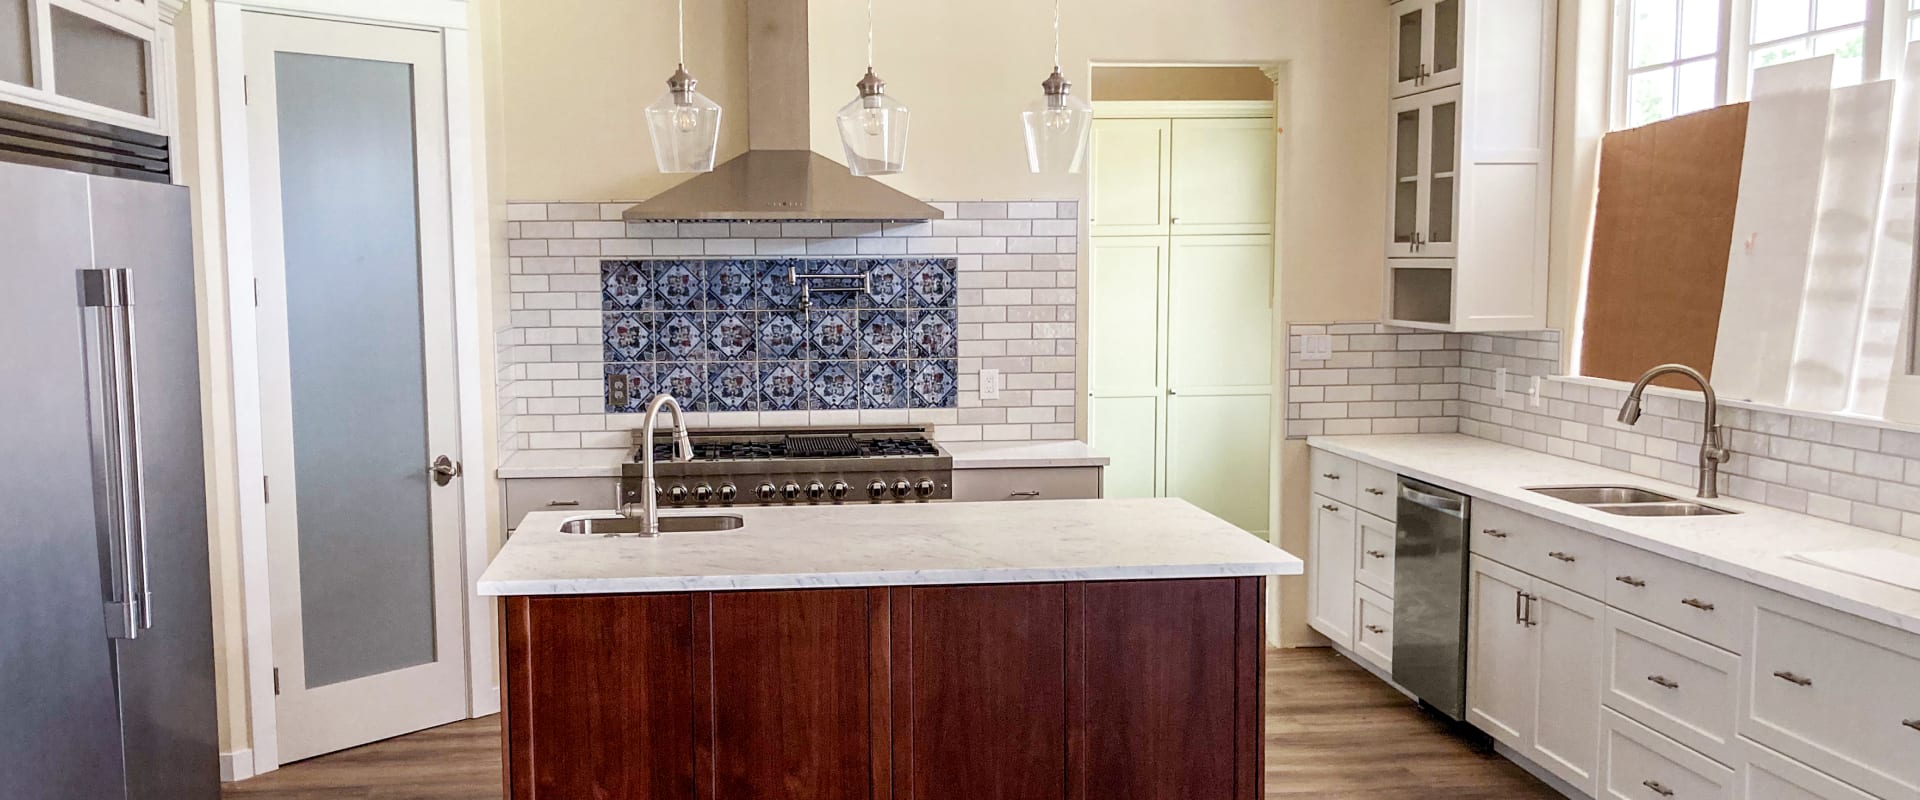 A Custom design kitchen design and remodel by Fidelis Woodworks